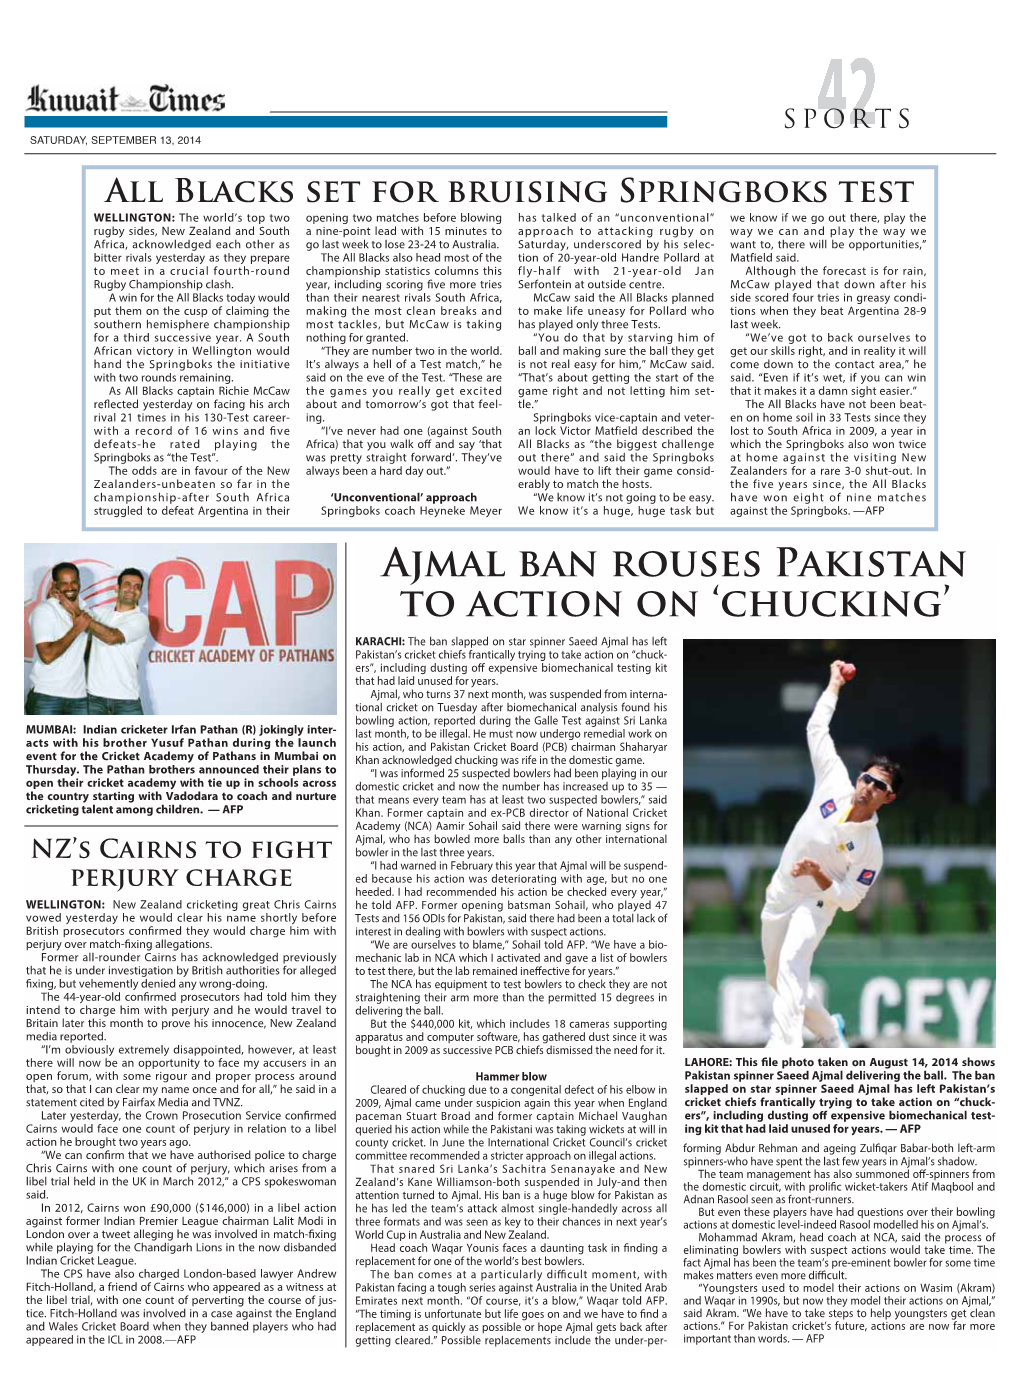 Ajmal Ban Rouses Pakistan to Action on ‘Chucking’